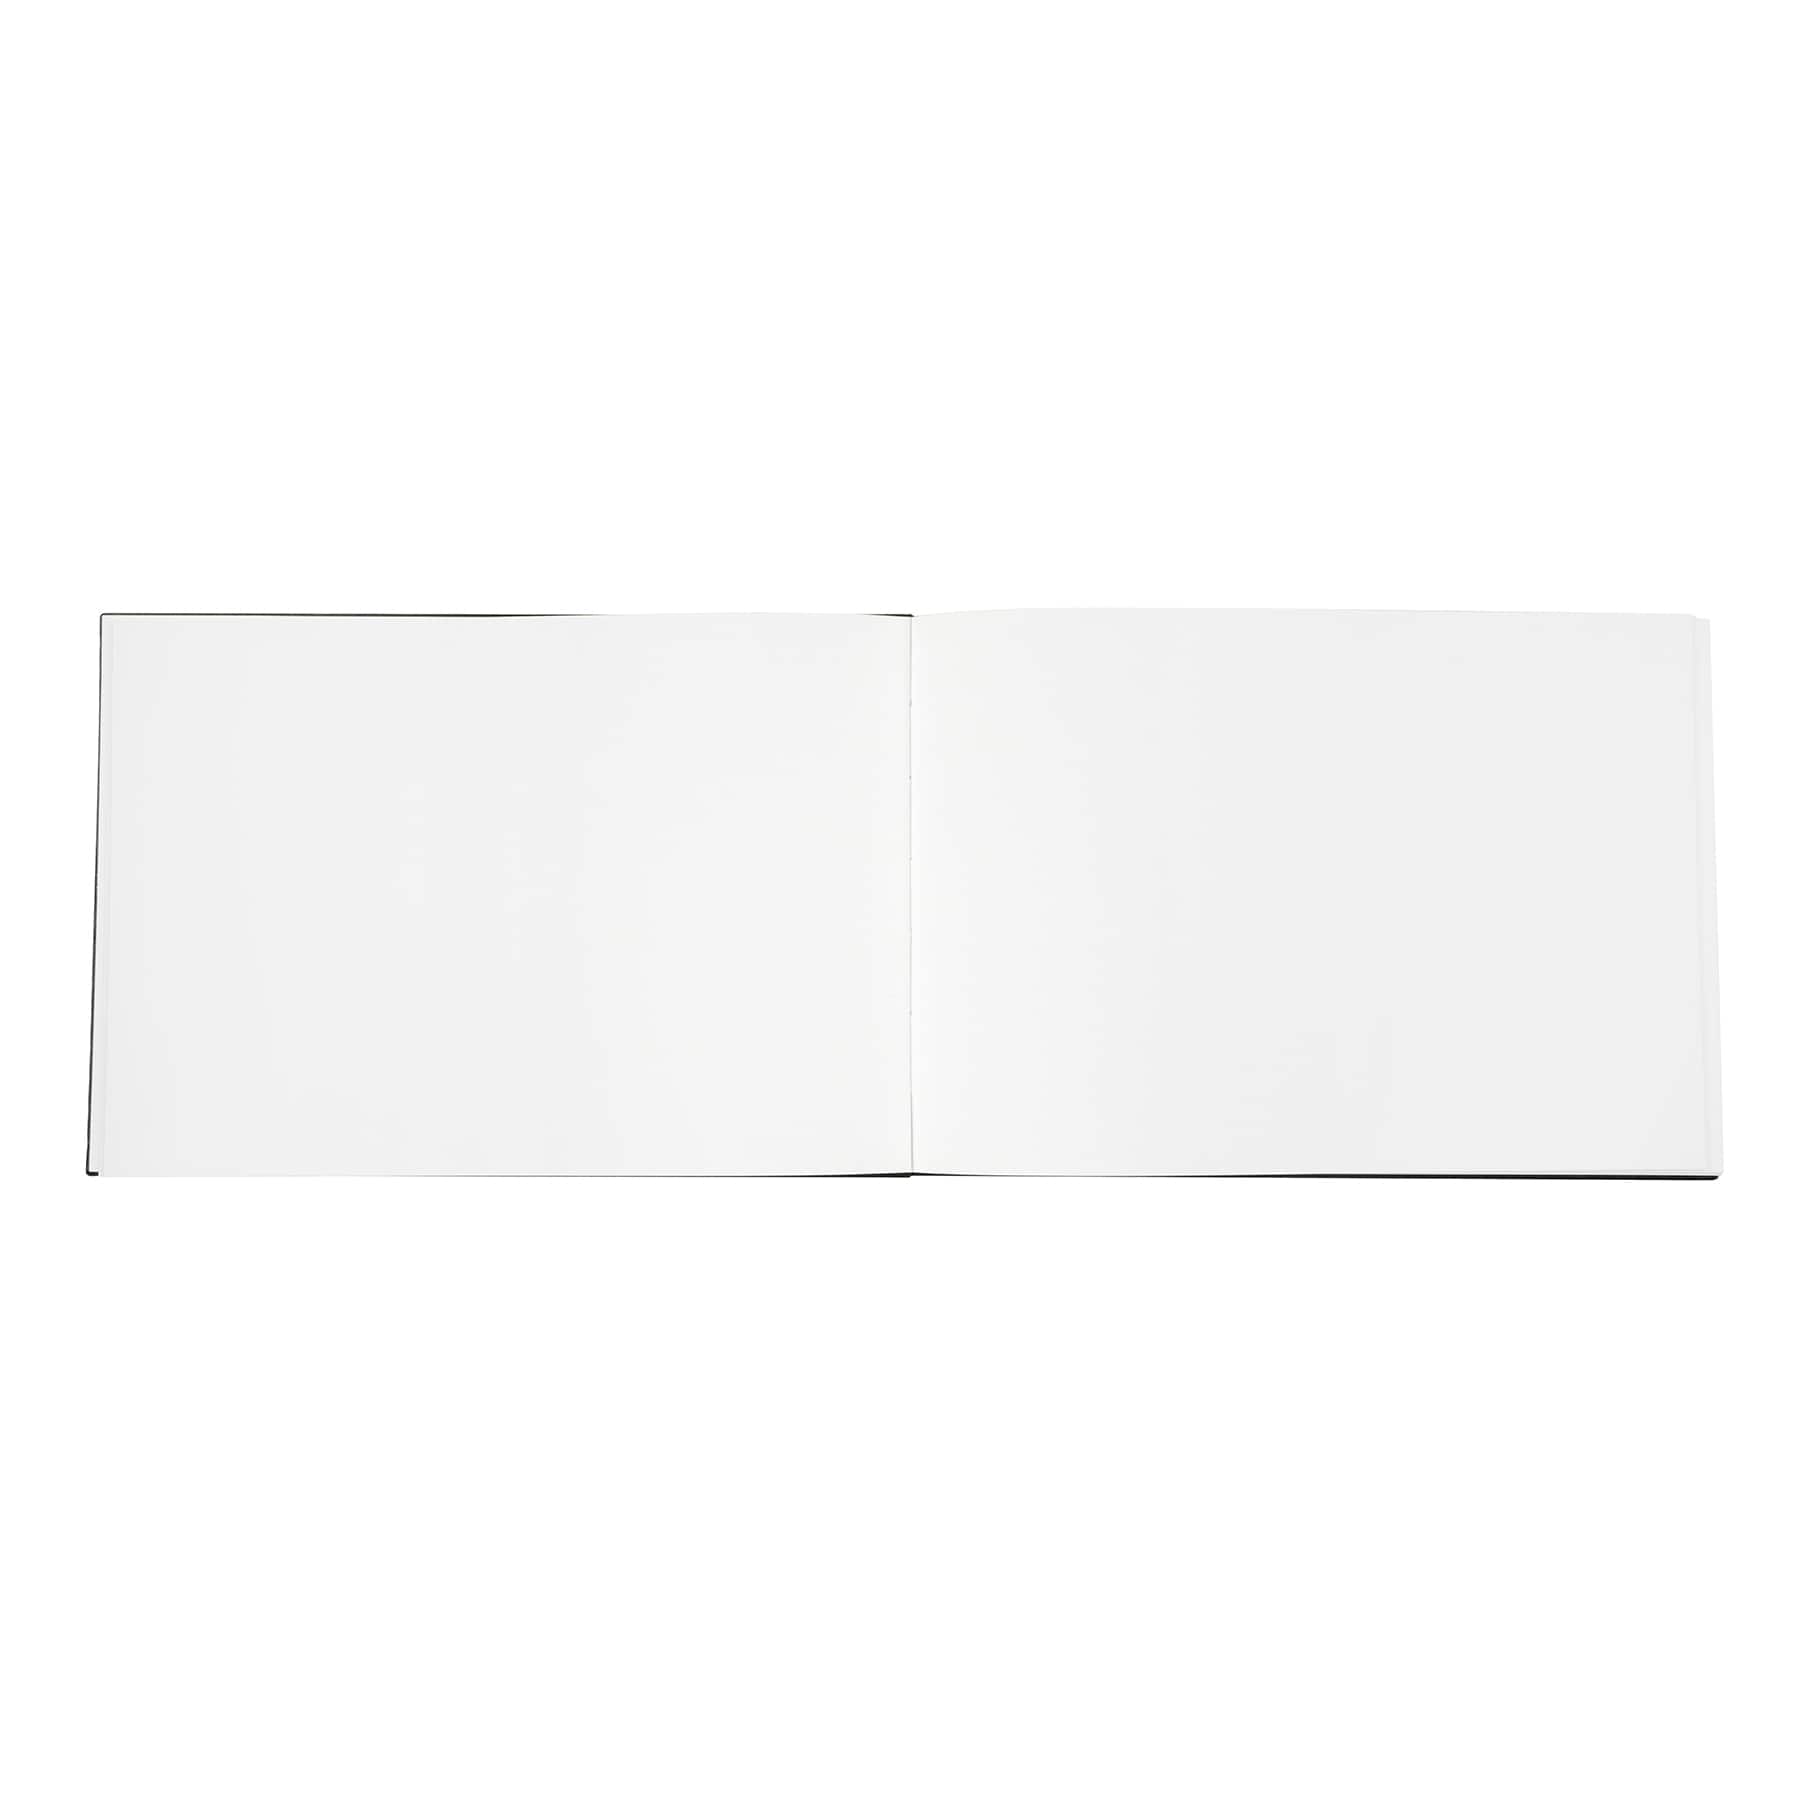 12 Pack: Lay Flat Sketchbook by Artist's Loft™